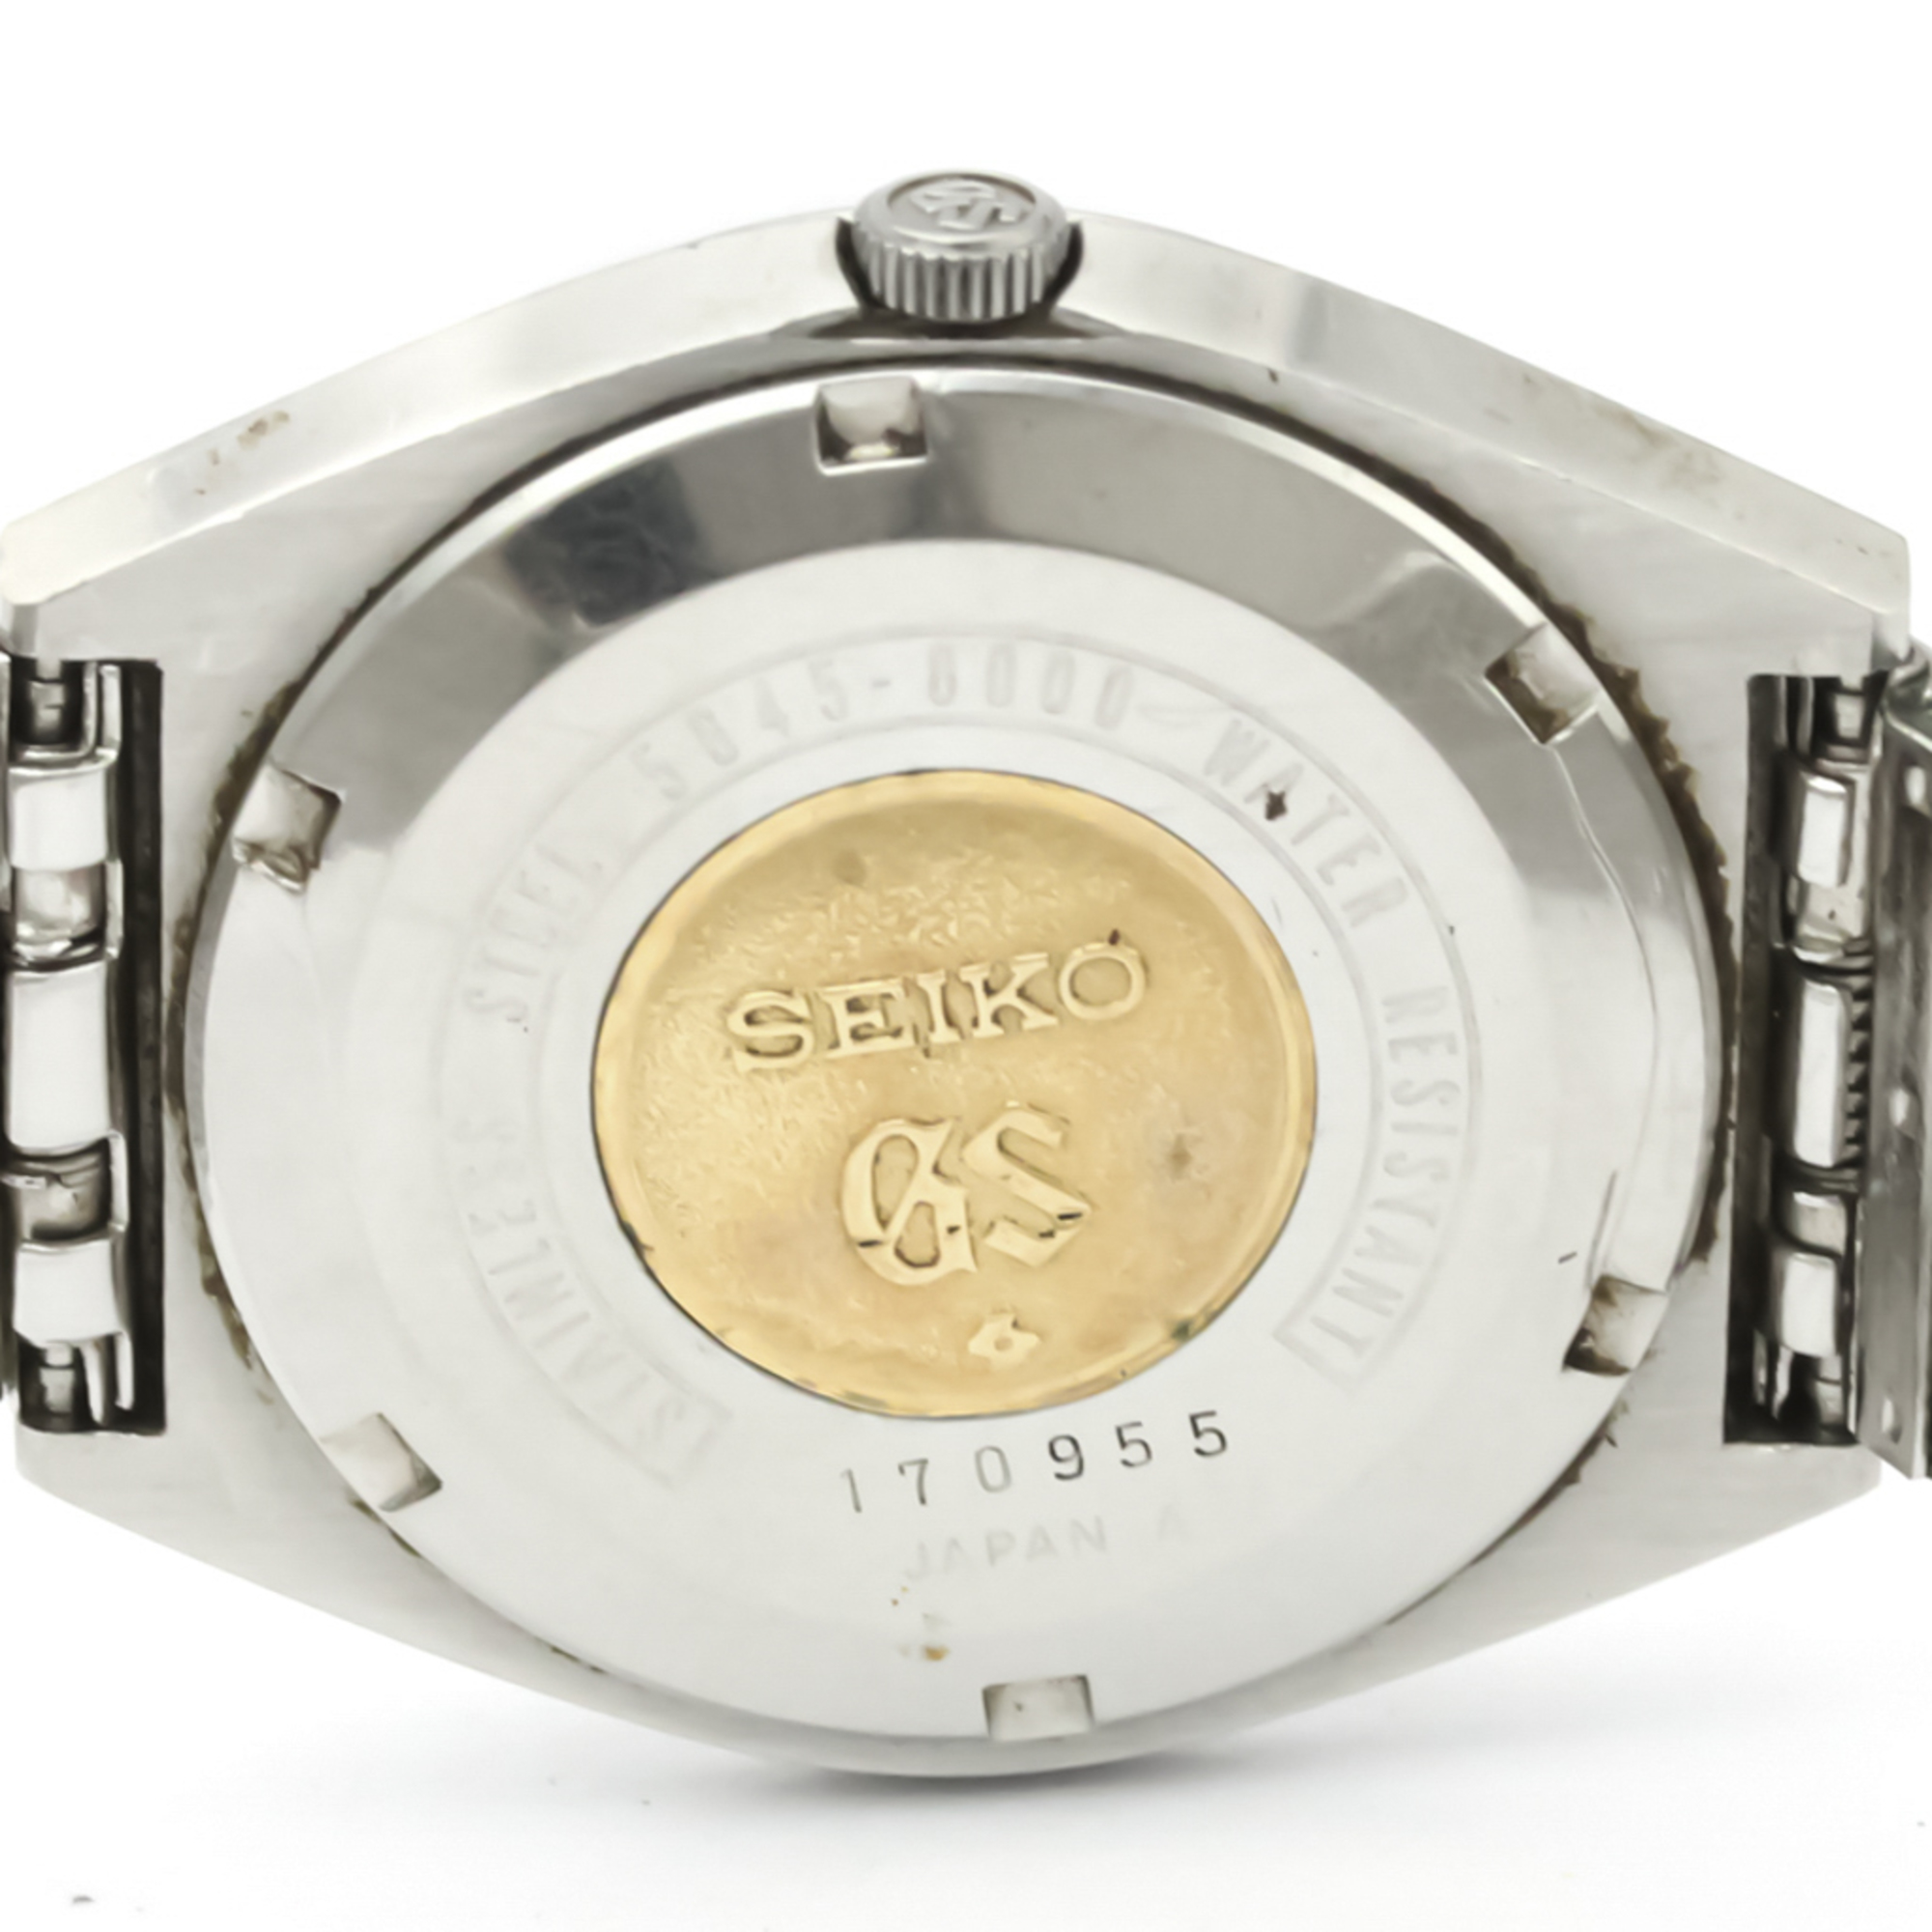 Seiko Grand Seiko Automatic Stainless Steel Men's Dress Watch 5645-8000